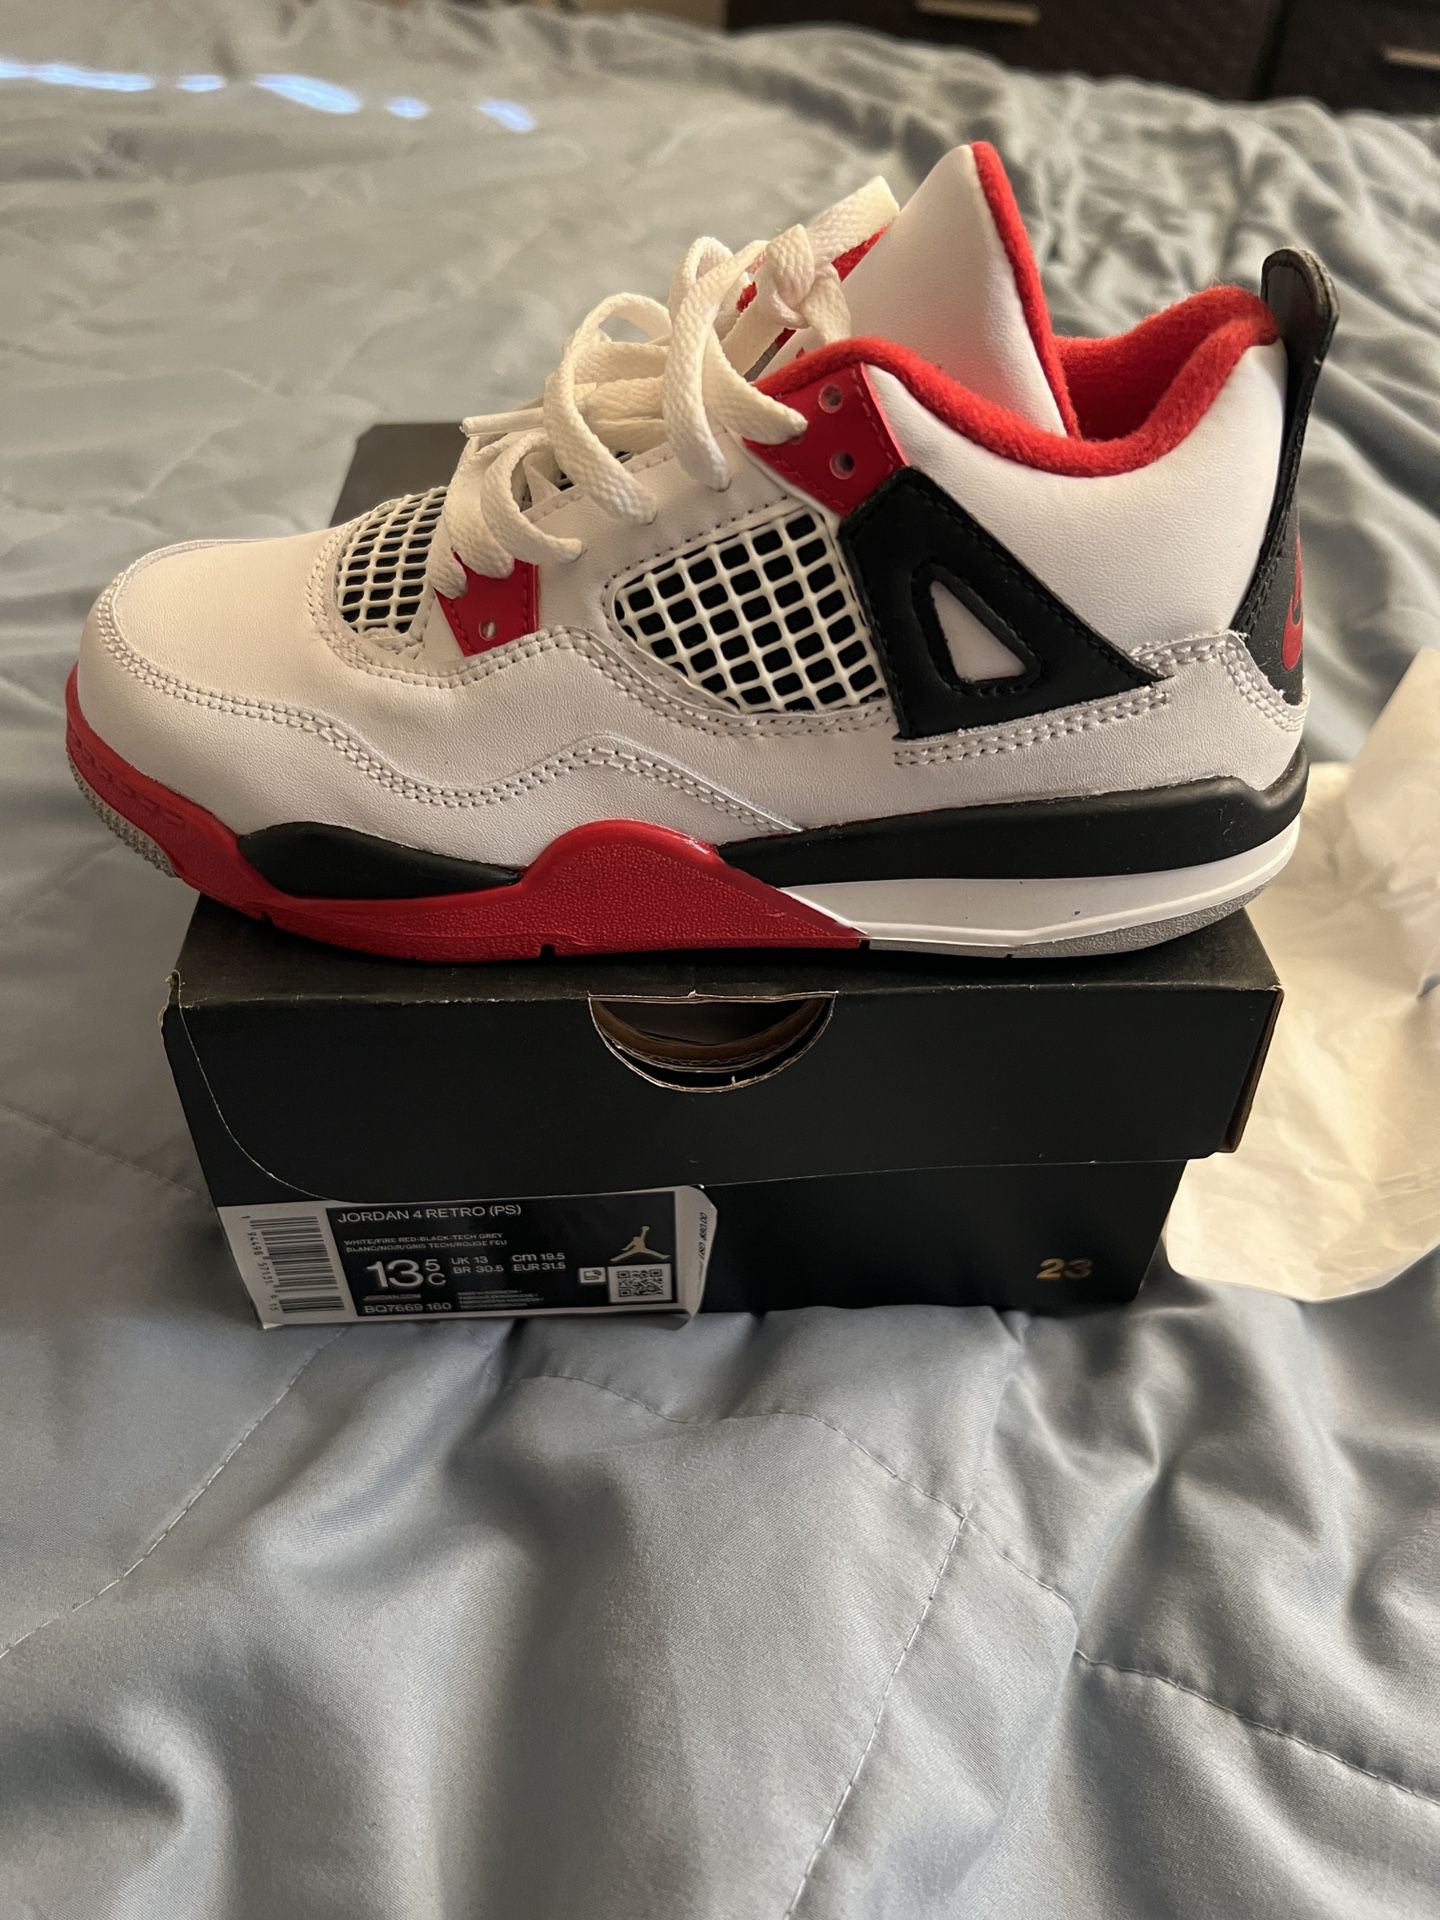 Jordan 4s Fire Red Size 13.5C